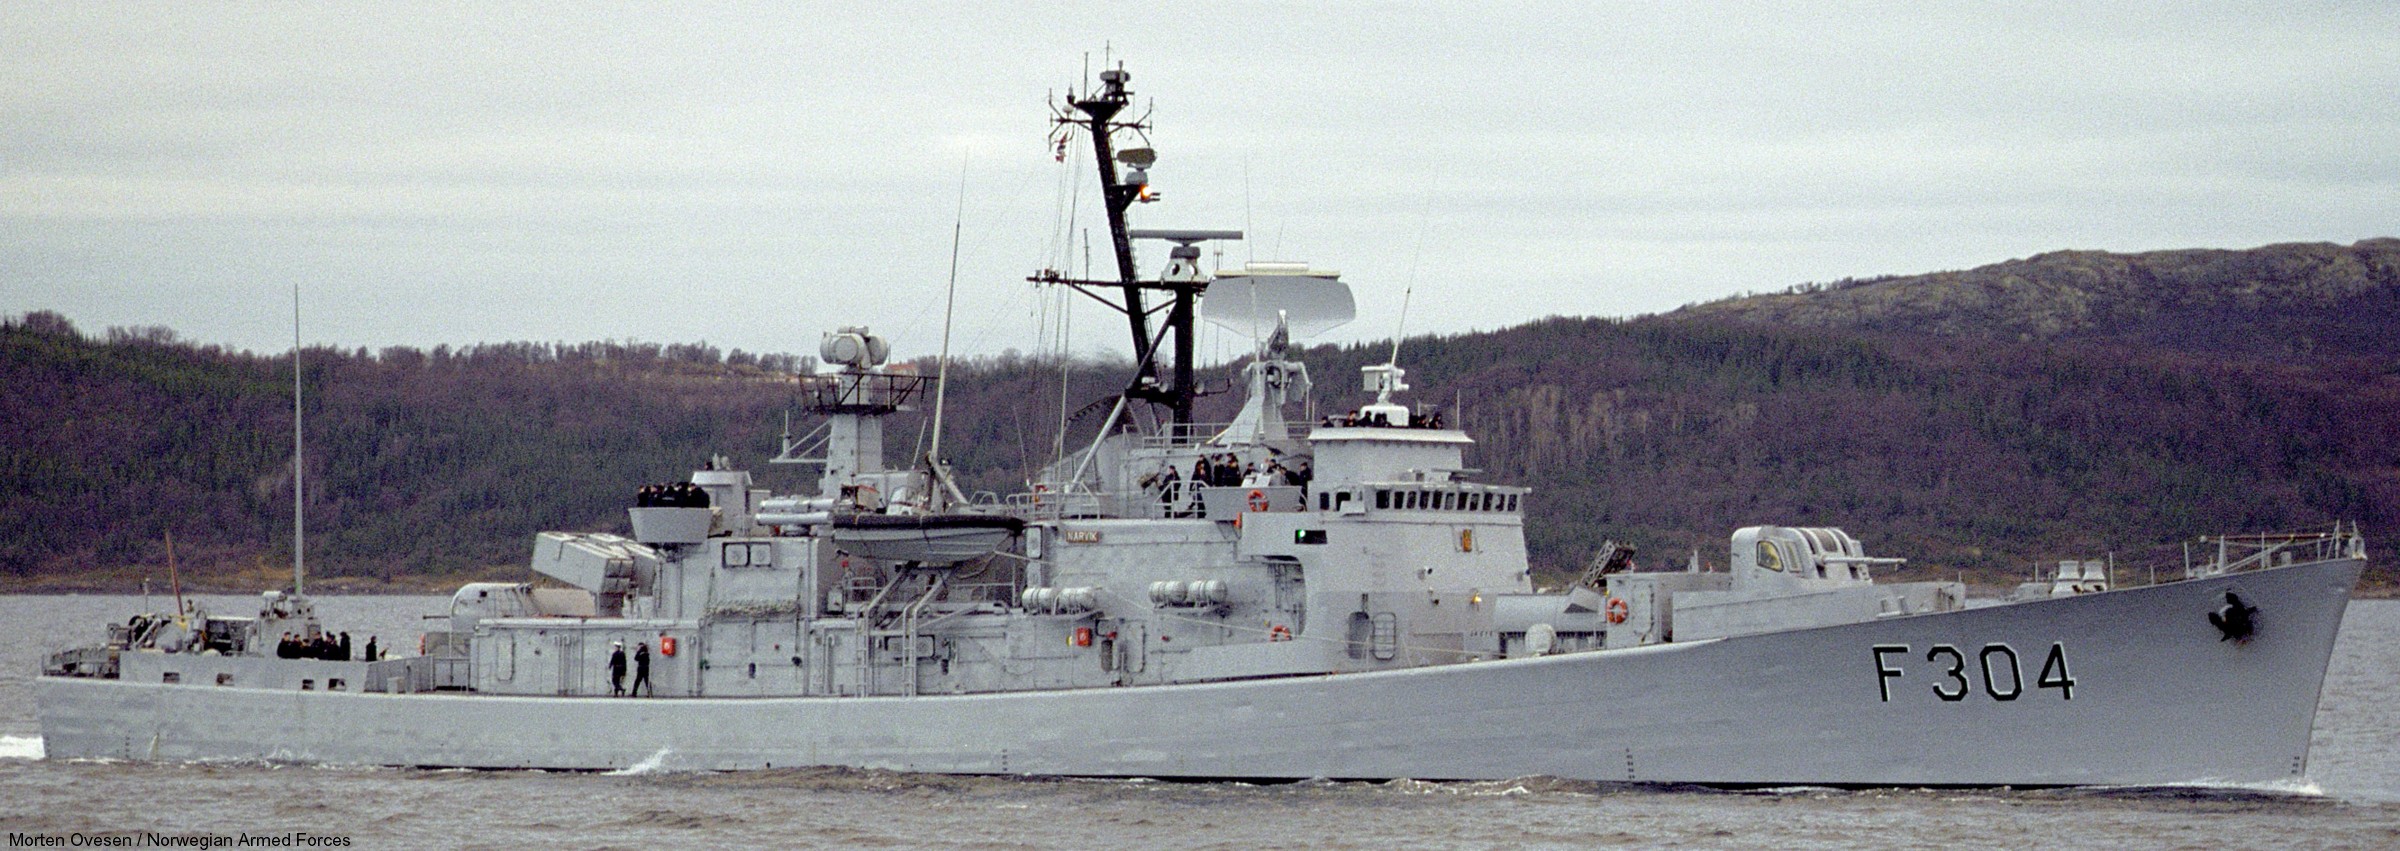 f-304 hnoms narvik knm oslo class frigate royal norwegian navy sjoforsvaret 14